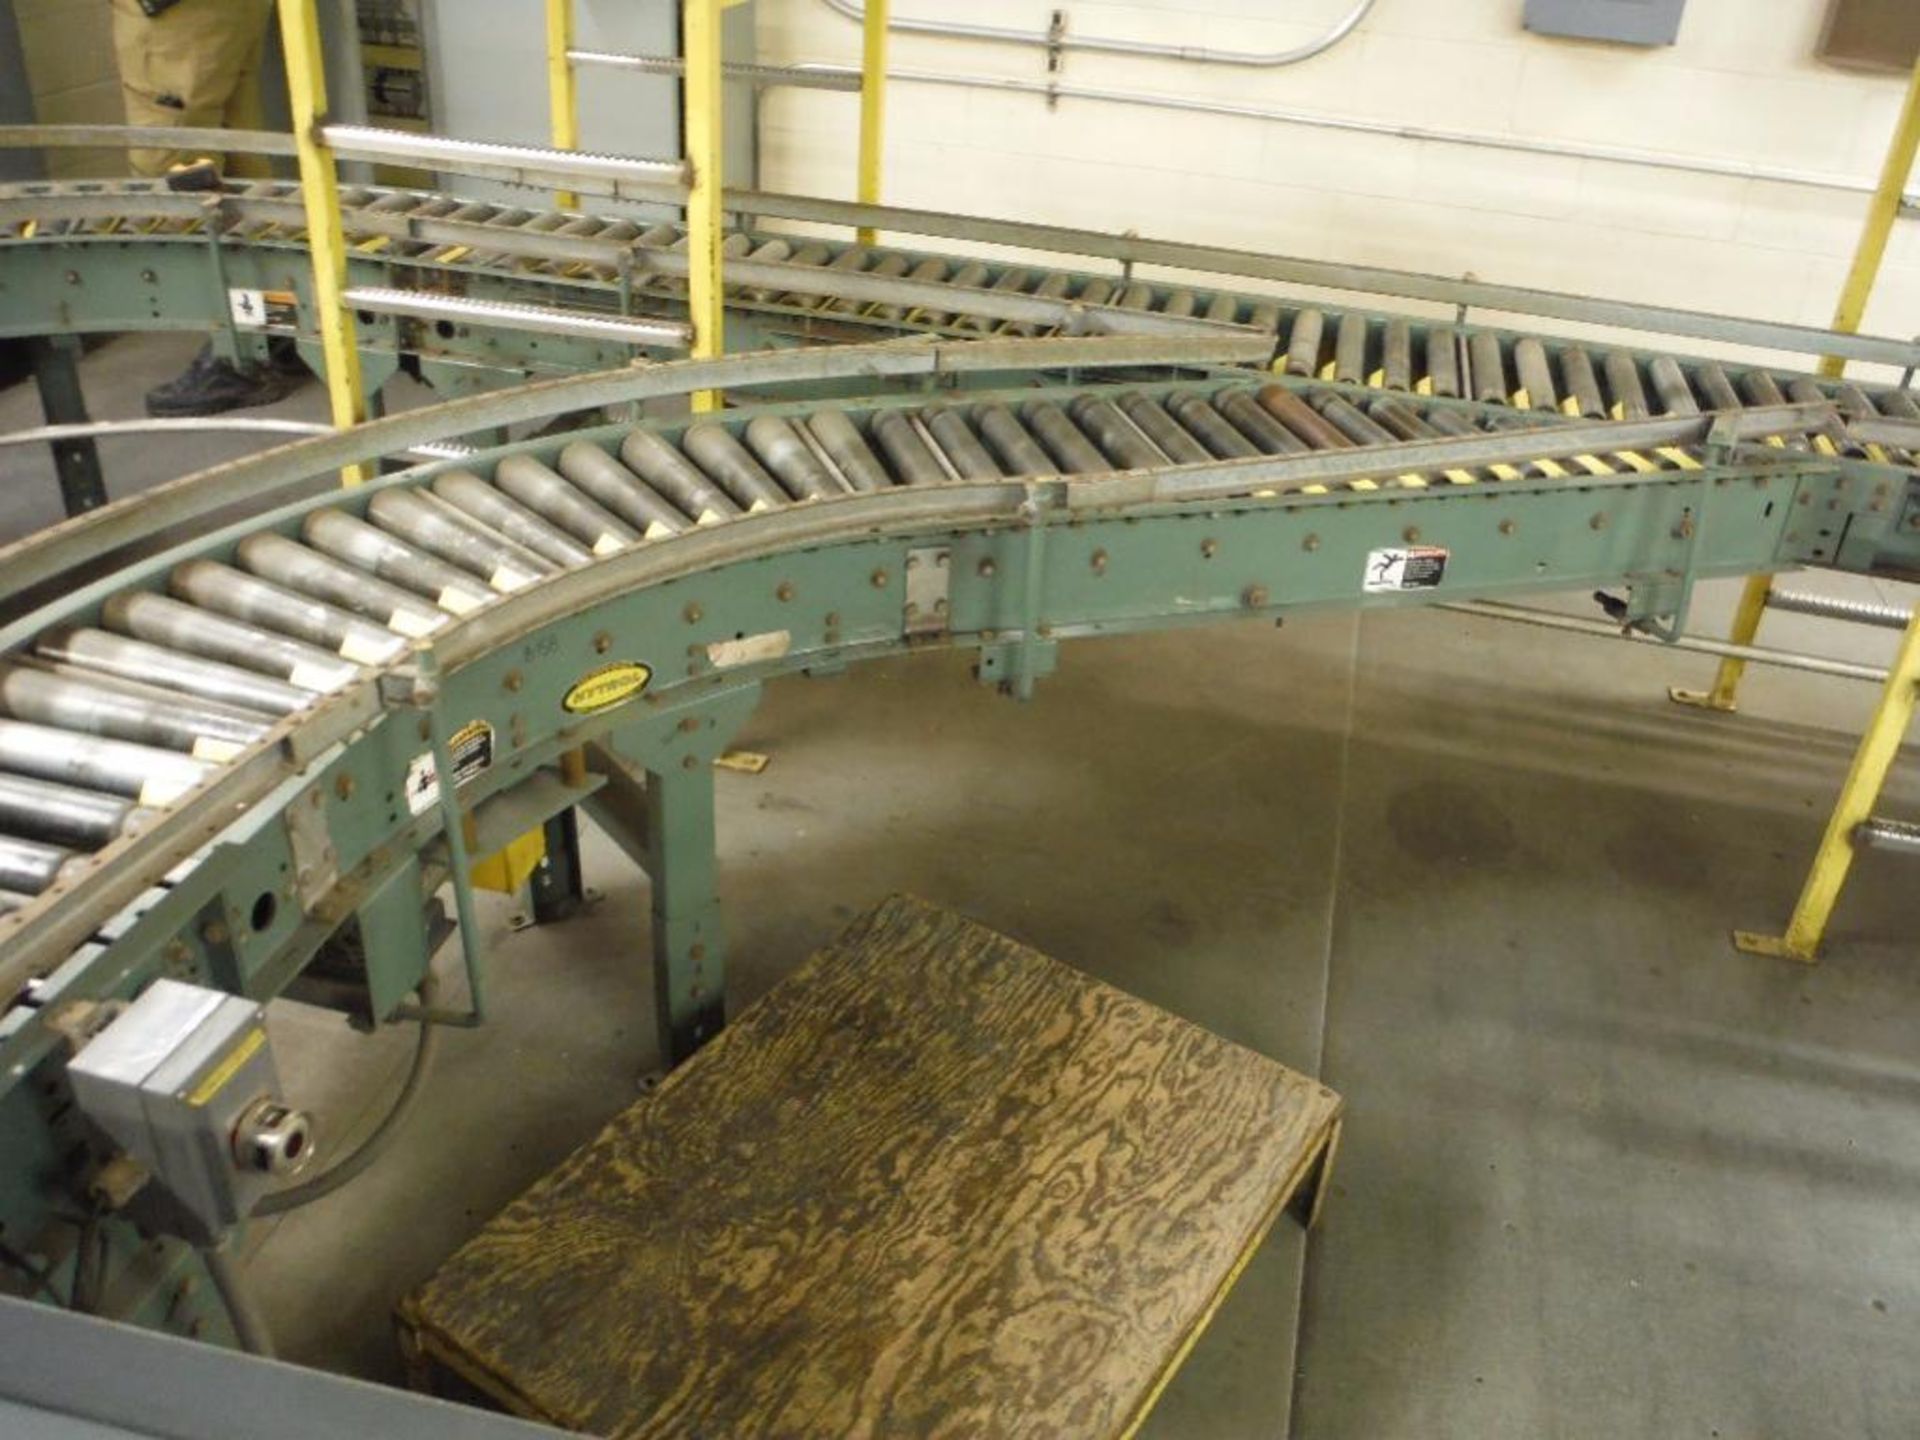 Hytrol 45 degree powered roller conveyor, 25 ft. long x 15 in. wide, motor and drive, mild steel - Image 4 of 6